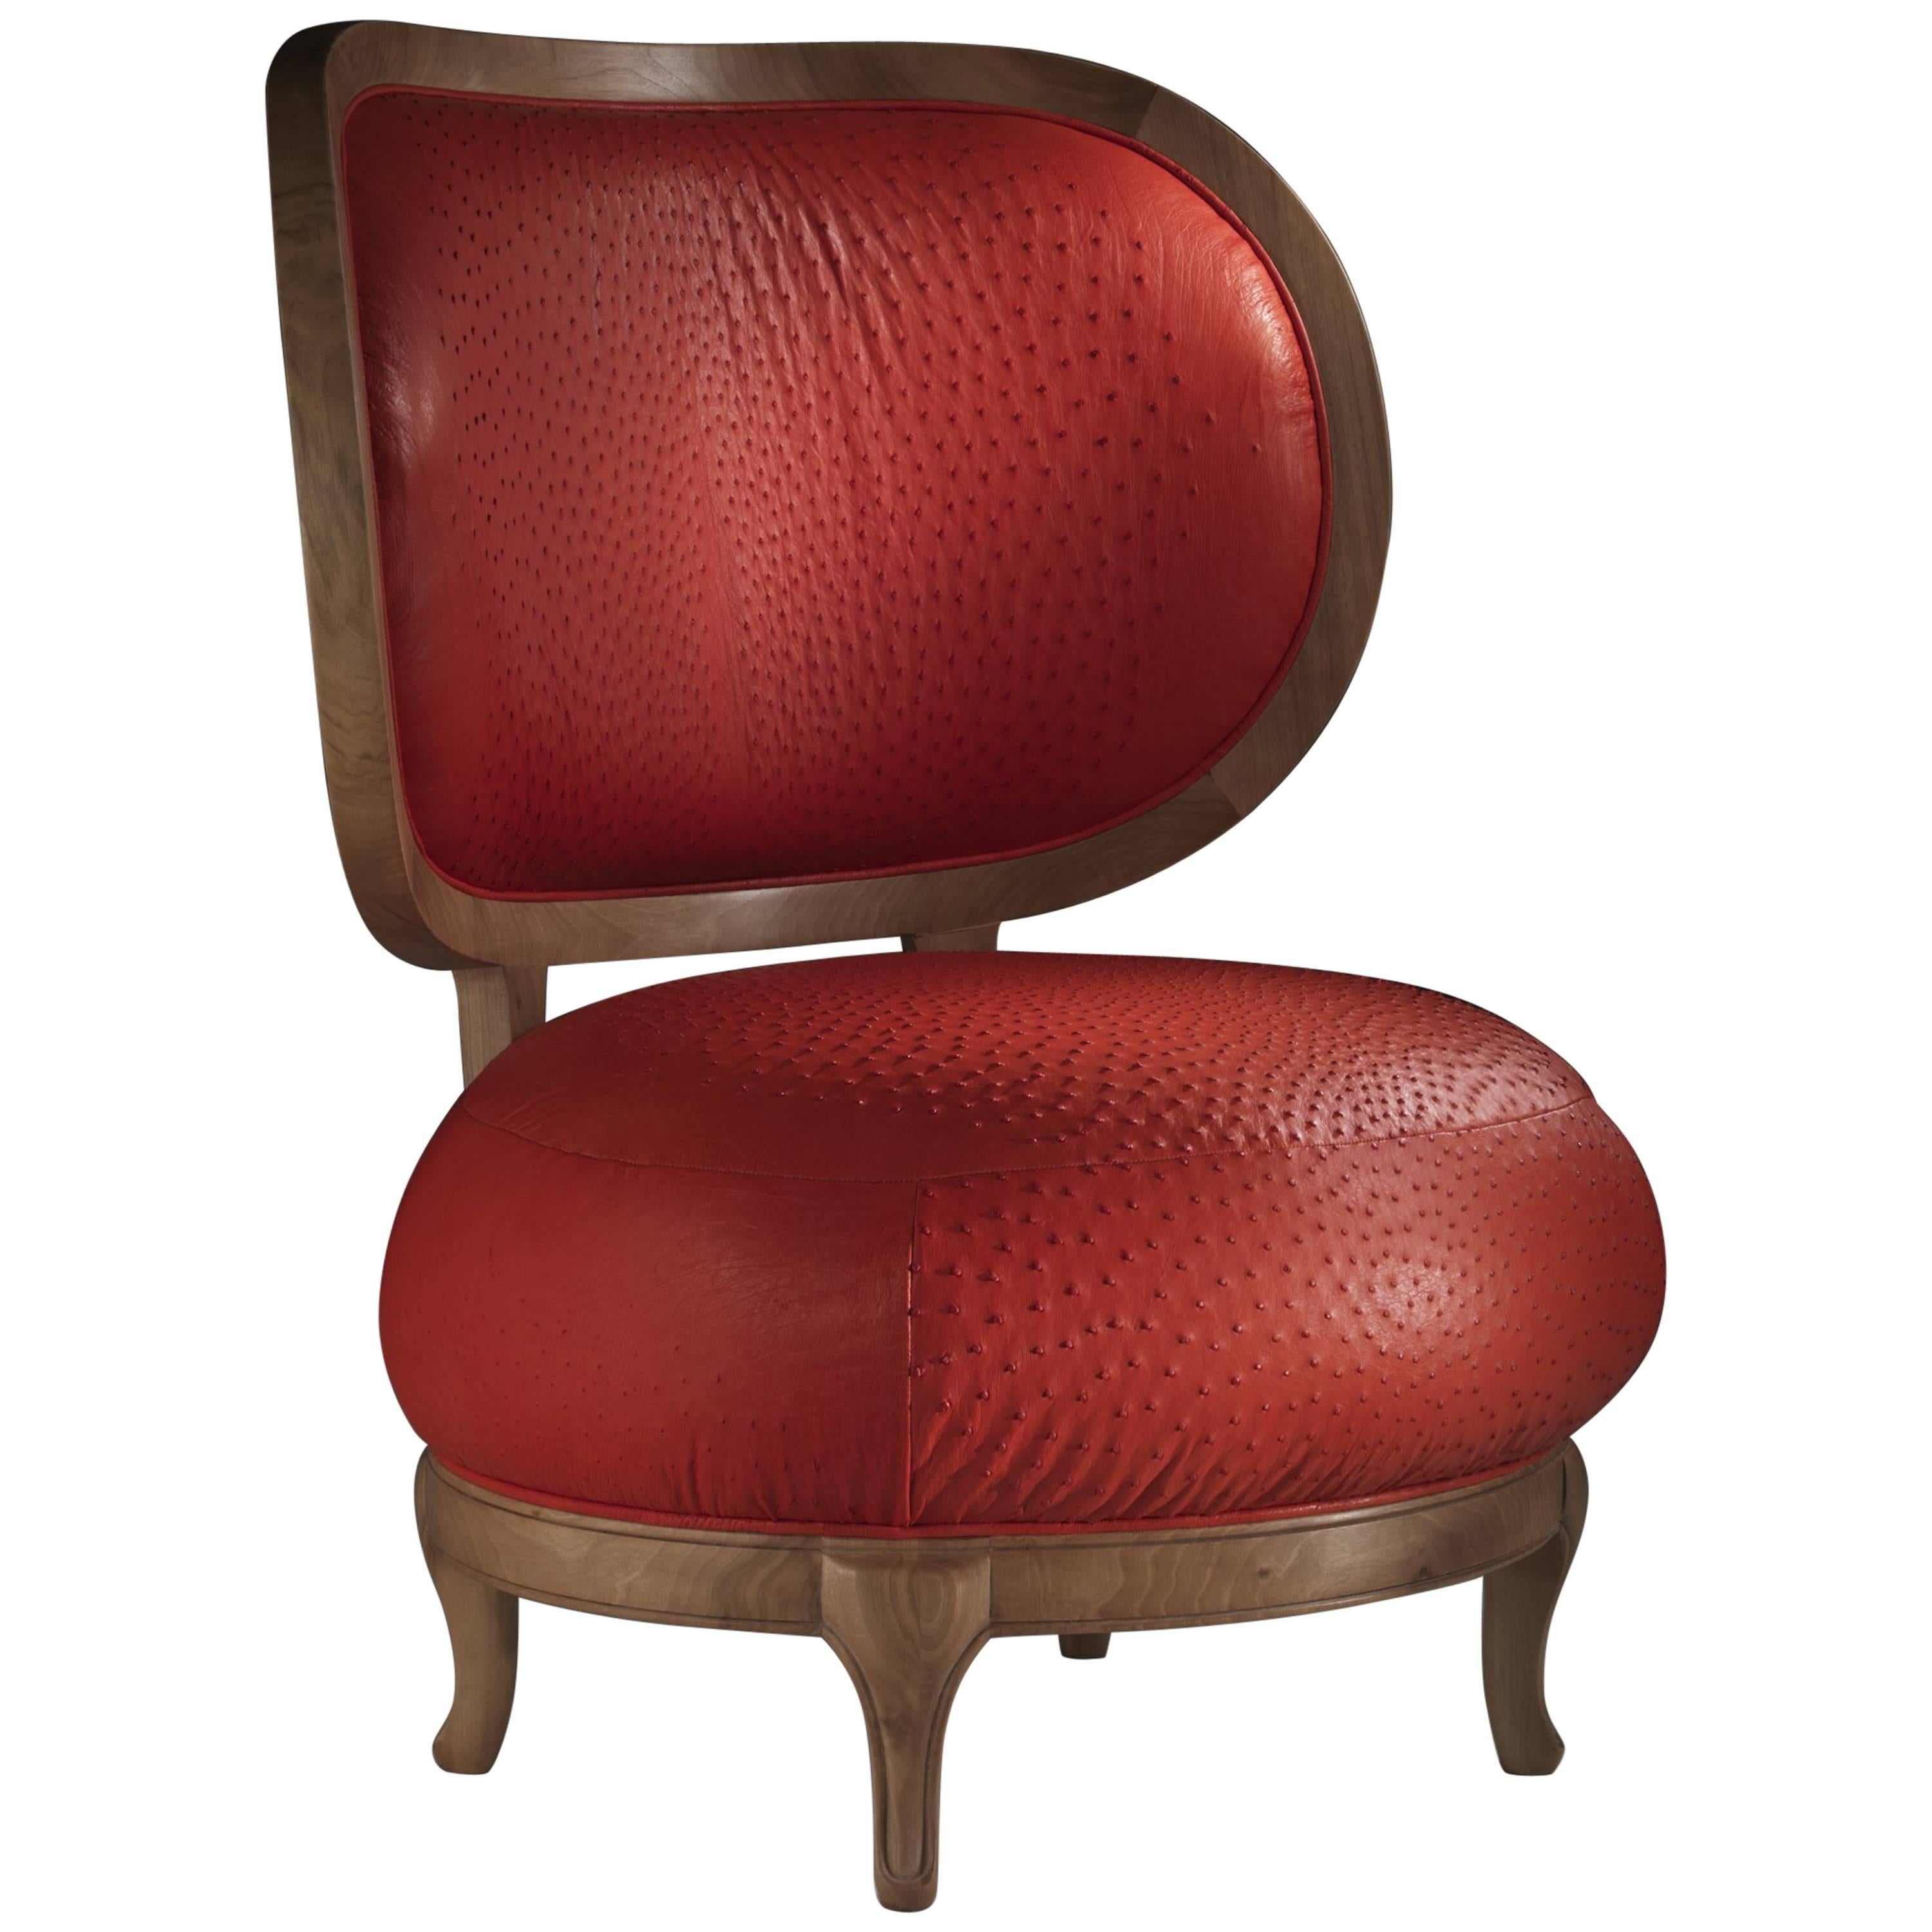 Struzza - armchair in ostrich leather, designed by Nigel Coates